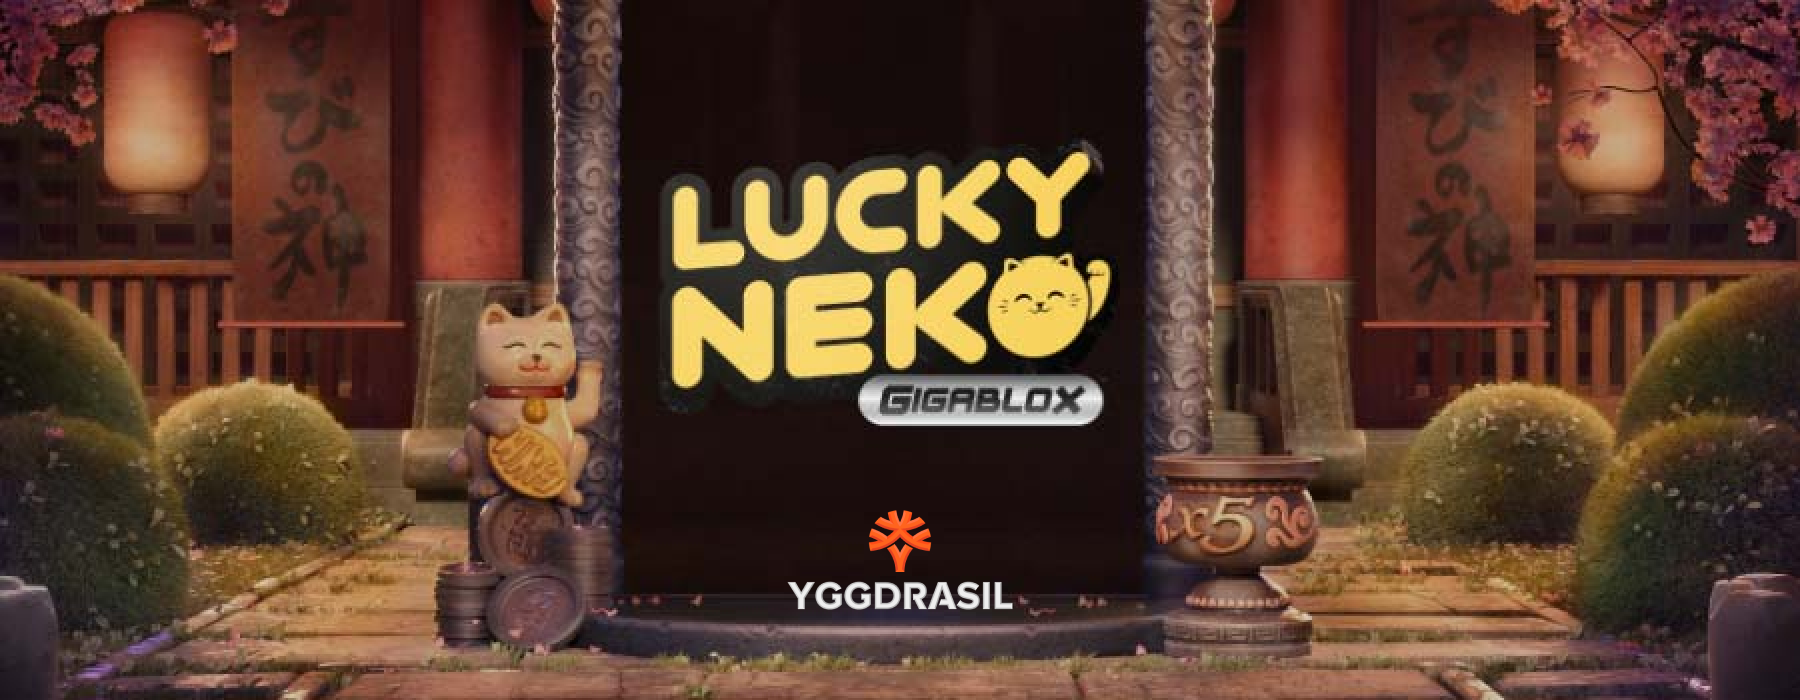 Lucky Neko Gigablox por Yggdrasil